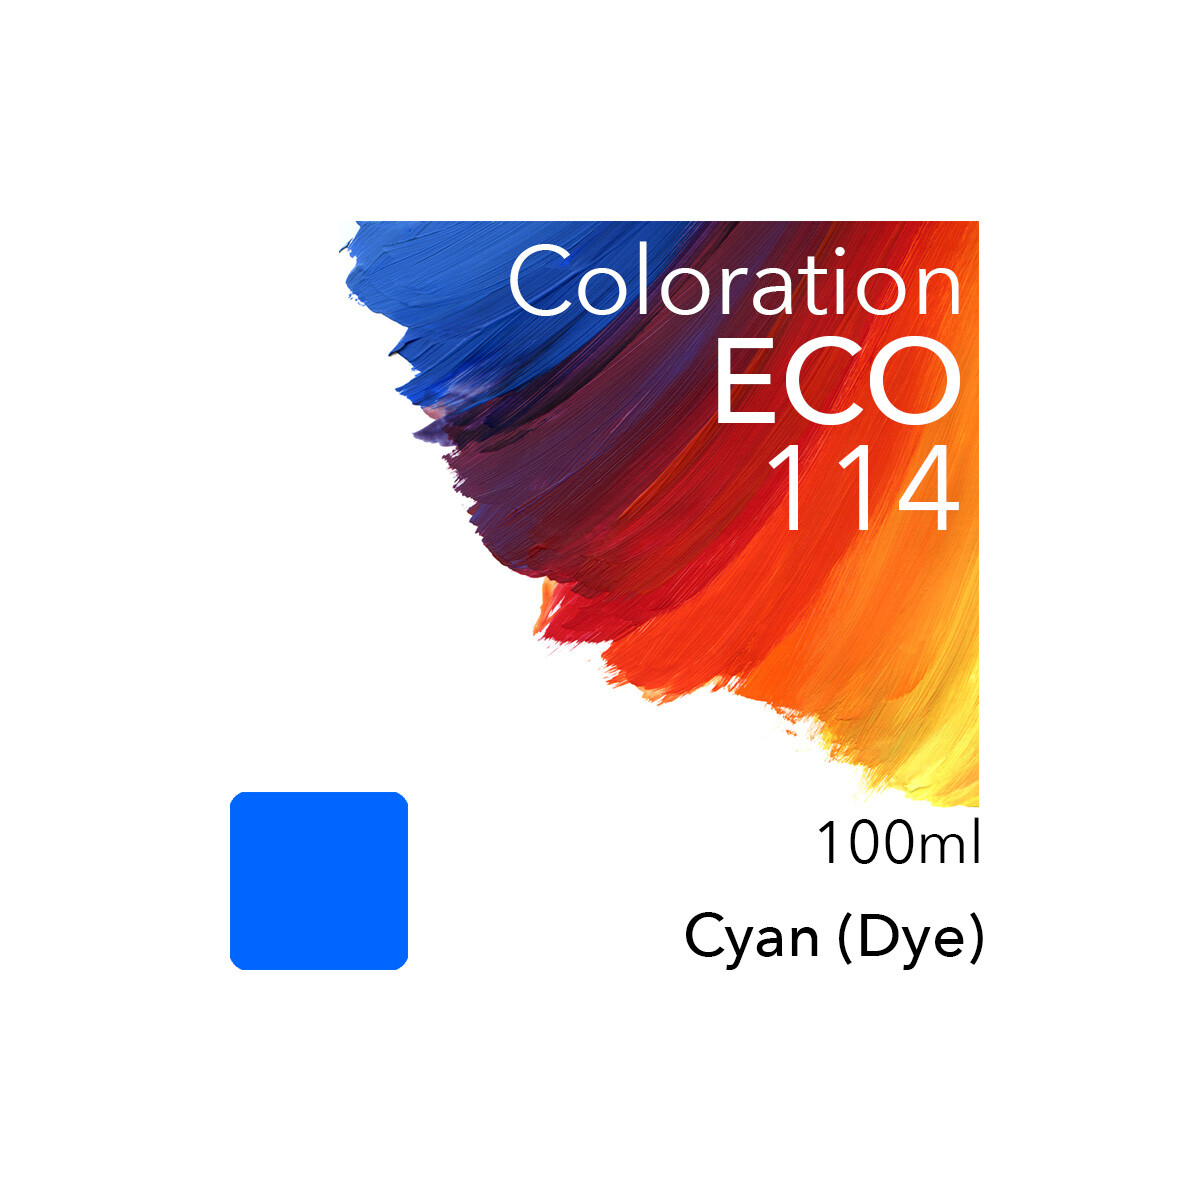 Coloration ECO kompatibel zu Epson 114 C (Cyan) 100ml